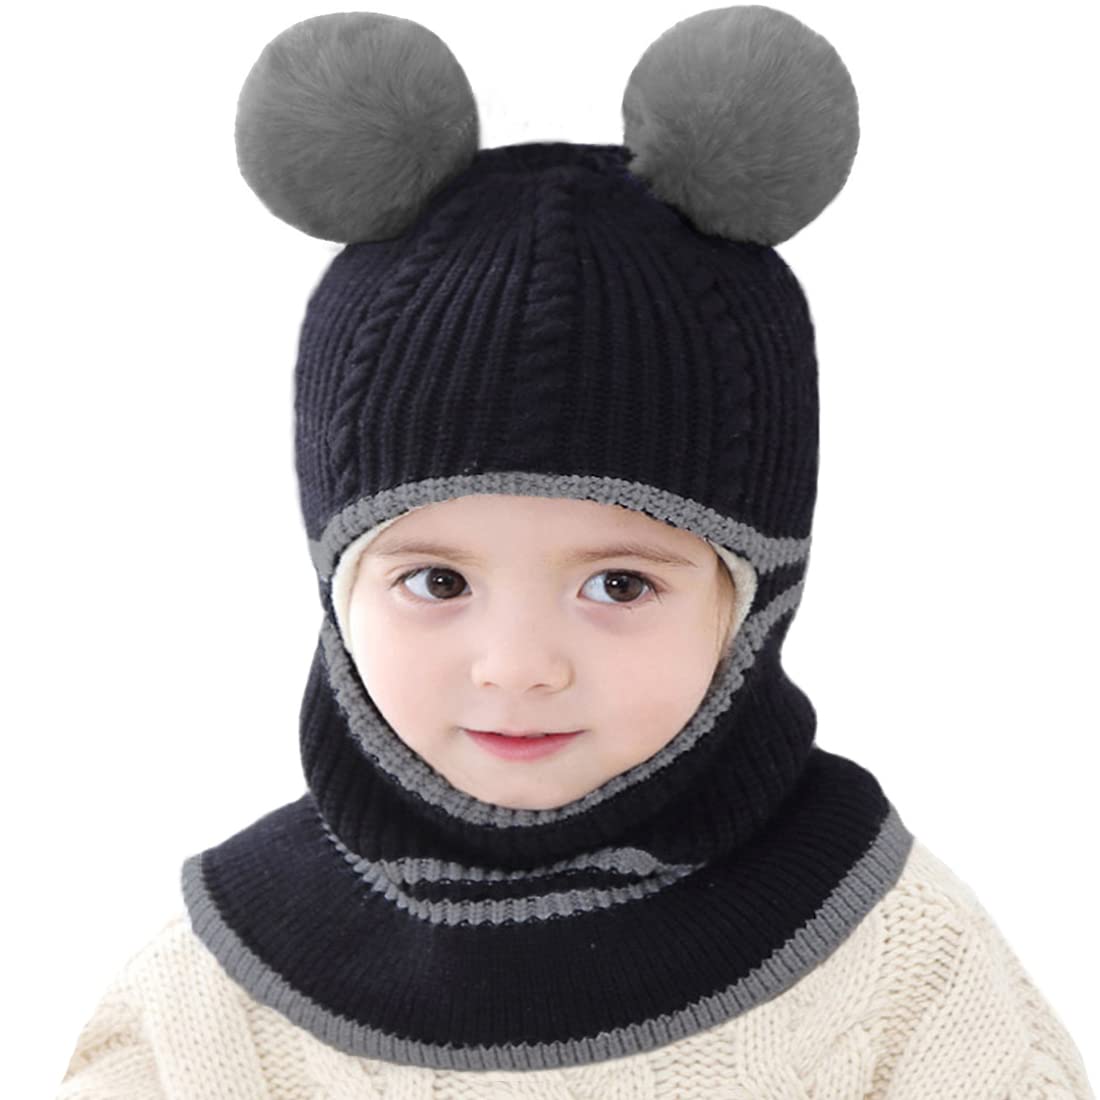 Bonvince Toddler Winter Hat, Baby Winter Hat, Fleece Lined Girls Boys Winter Hat, Kids Winter Hat Scarf Earflap Hood Skull Caps, 1-4T (Be